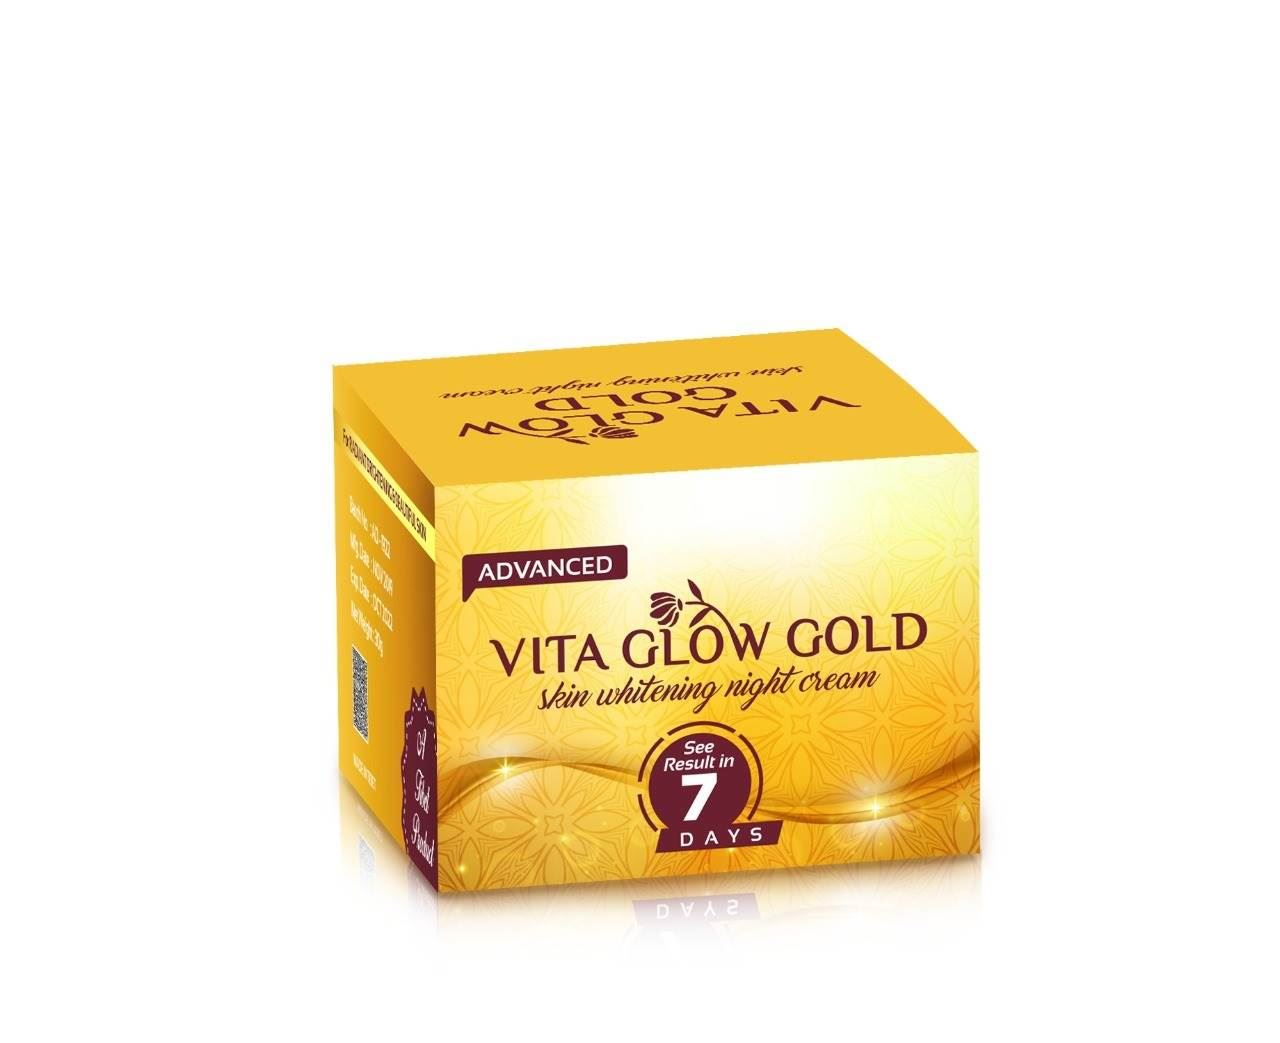 Vita Glow Gold Glutathione Skin Whitening Night Cream reviews